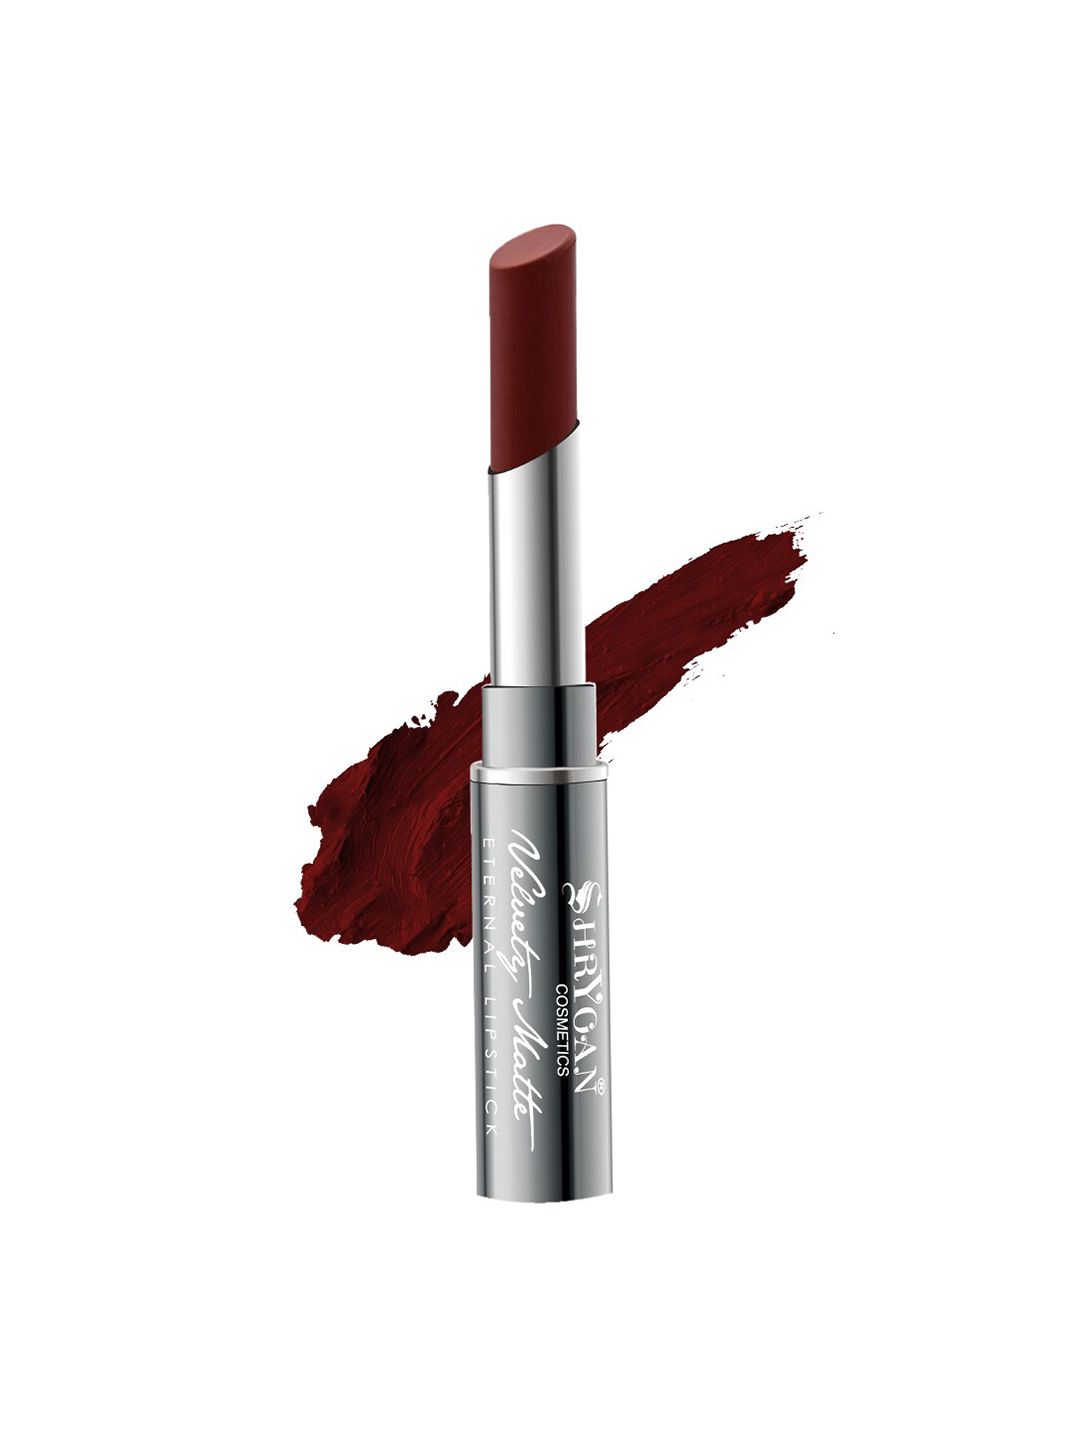 SHRYOAN Velvety Matte Non-Transfer Eternal Lipstick -  Mocha Shot 03 Price in India